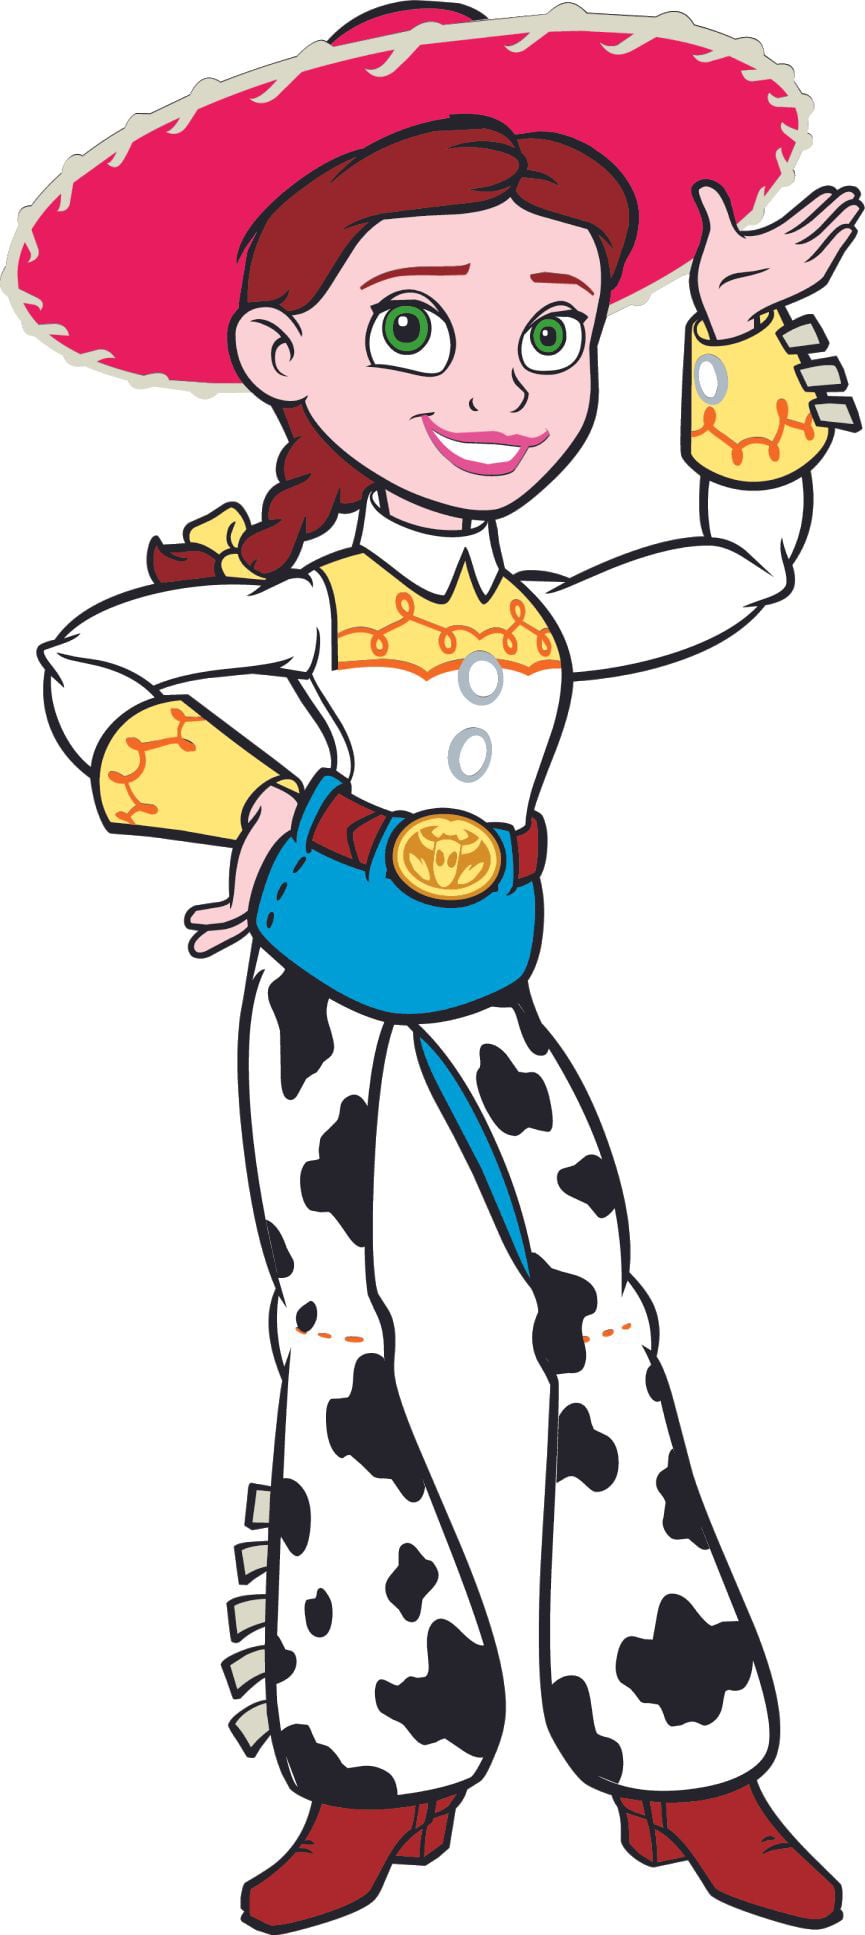 jessie cartoon character